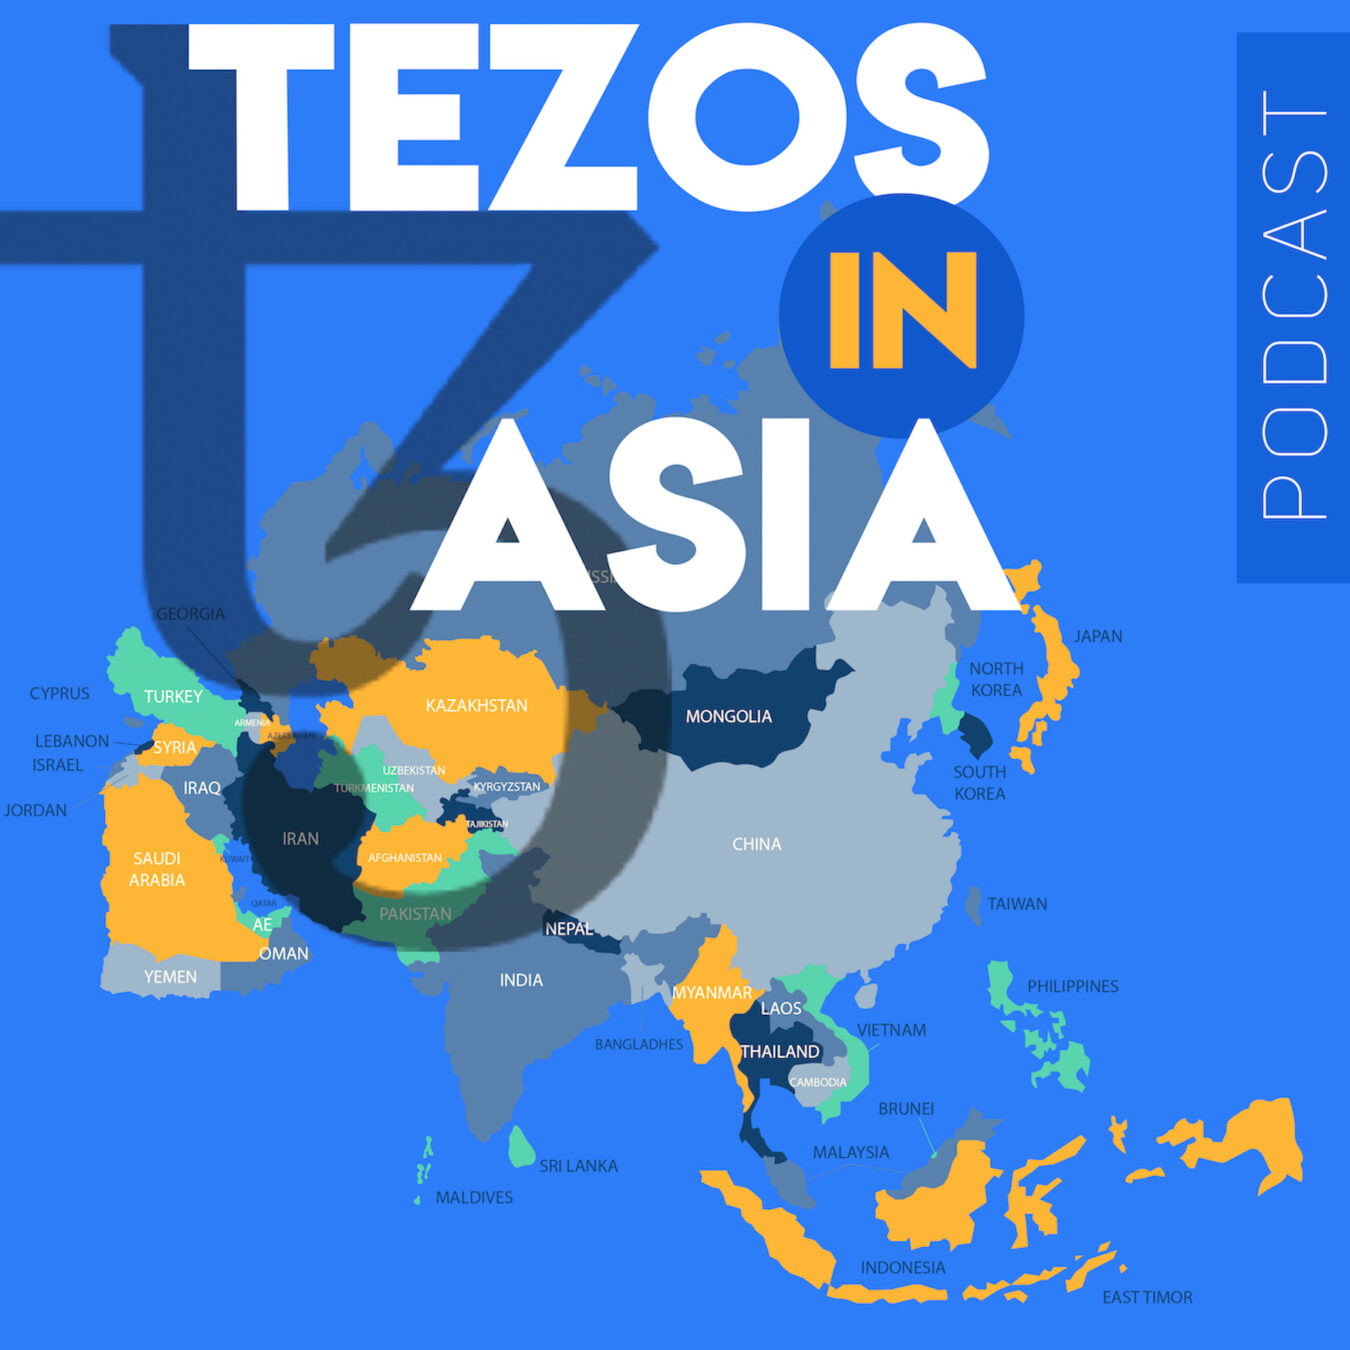 Tezos Korea Team on How to Build Great Local Developer Communities in Korea